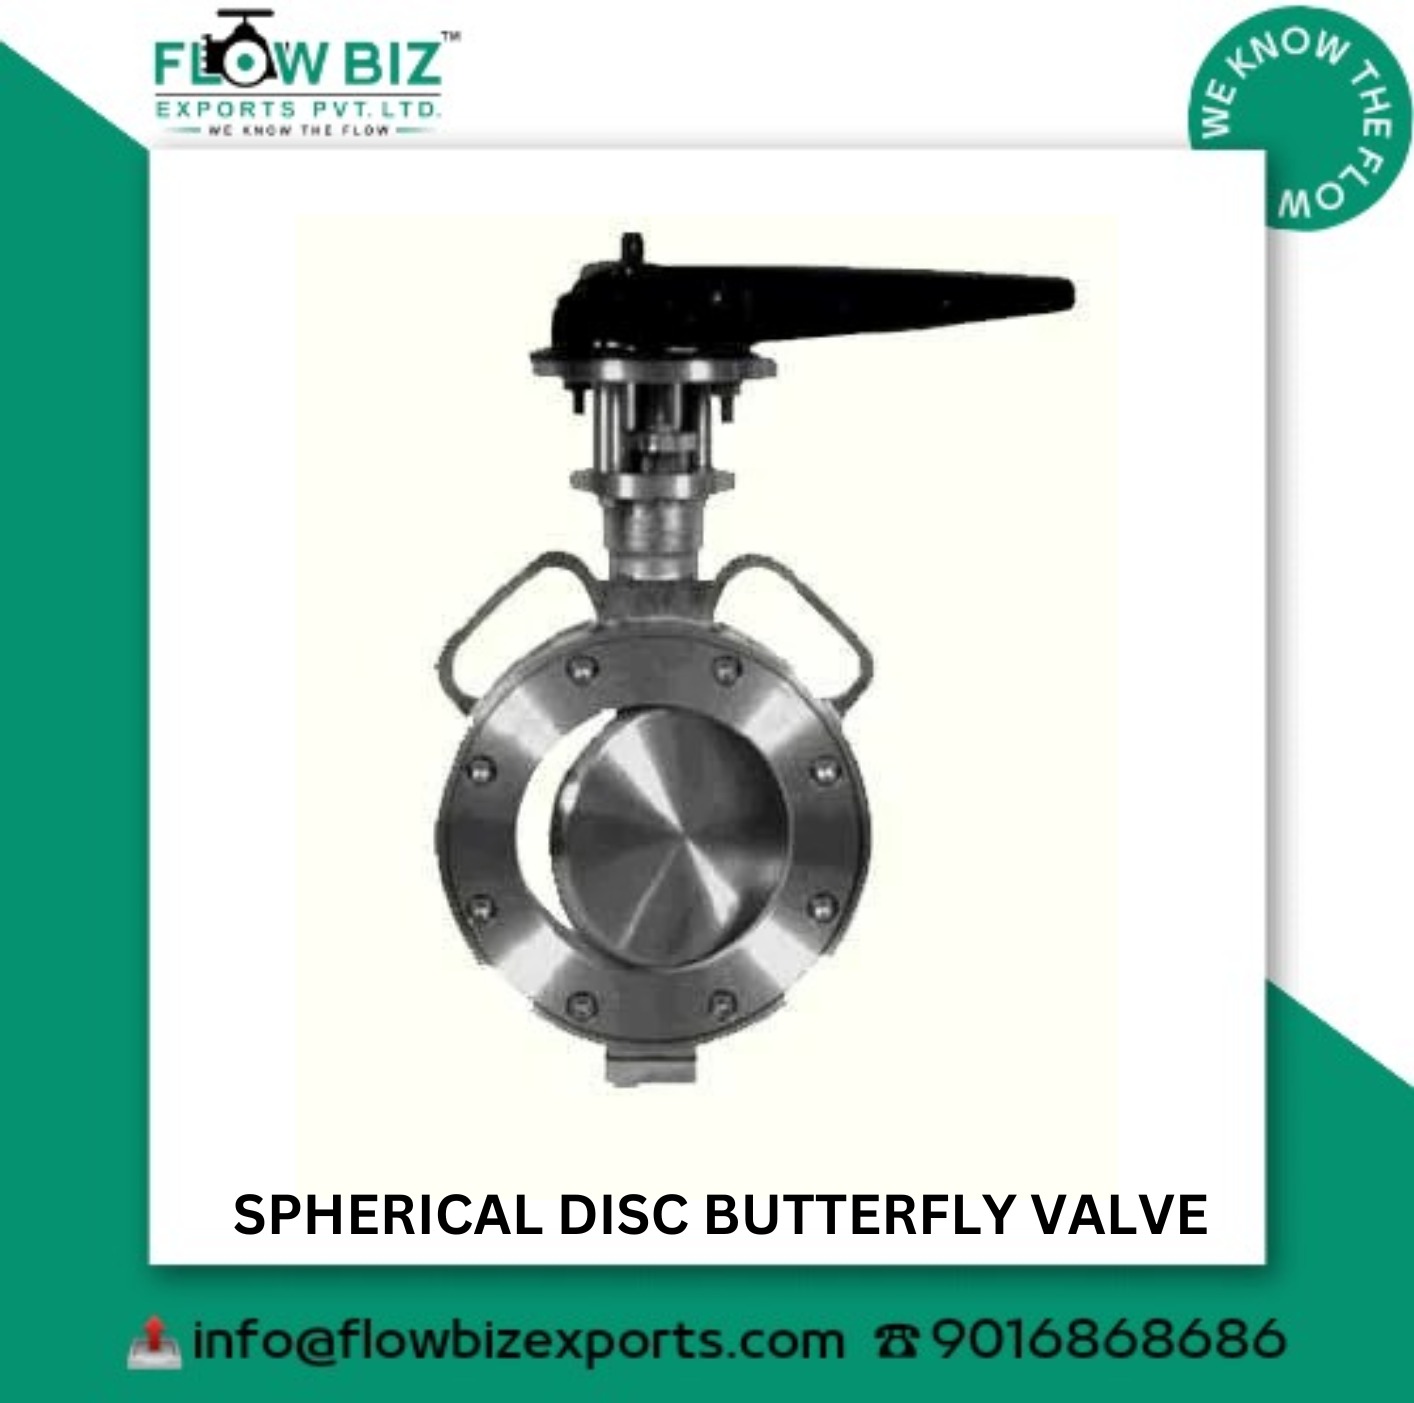 high-performance spherical disc butterfly valve manufacturer ahmedabad -  Flowbiz